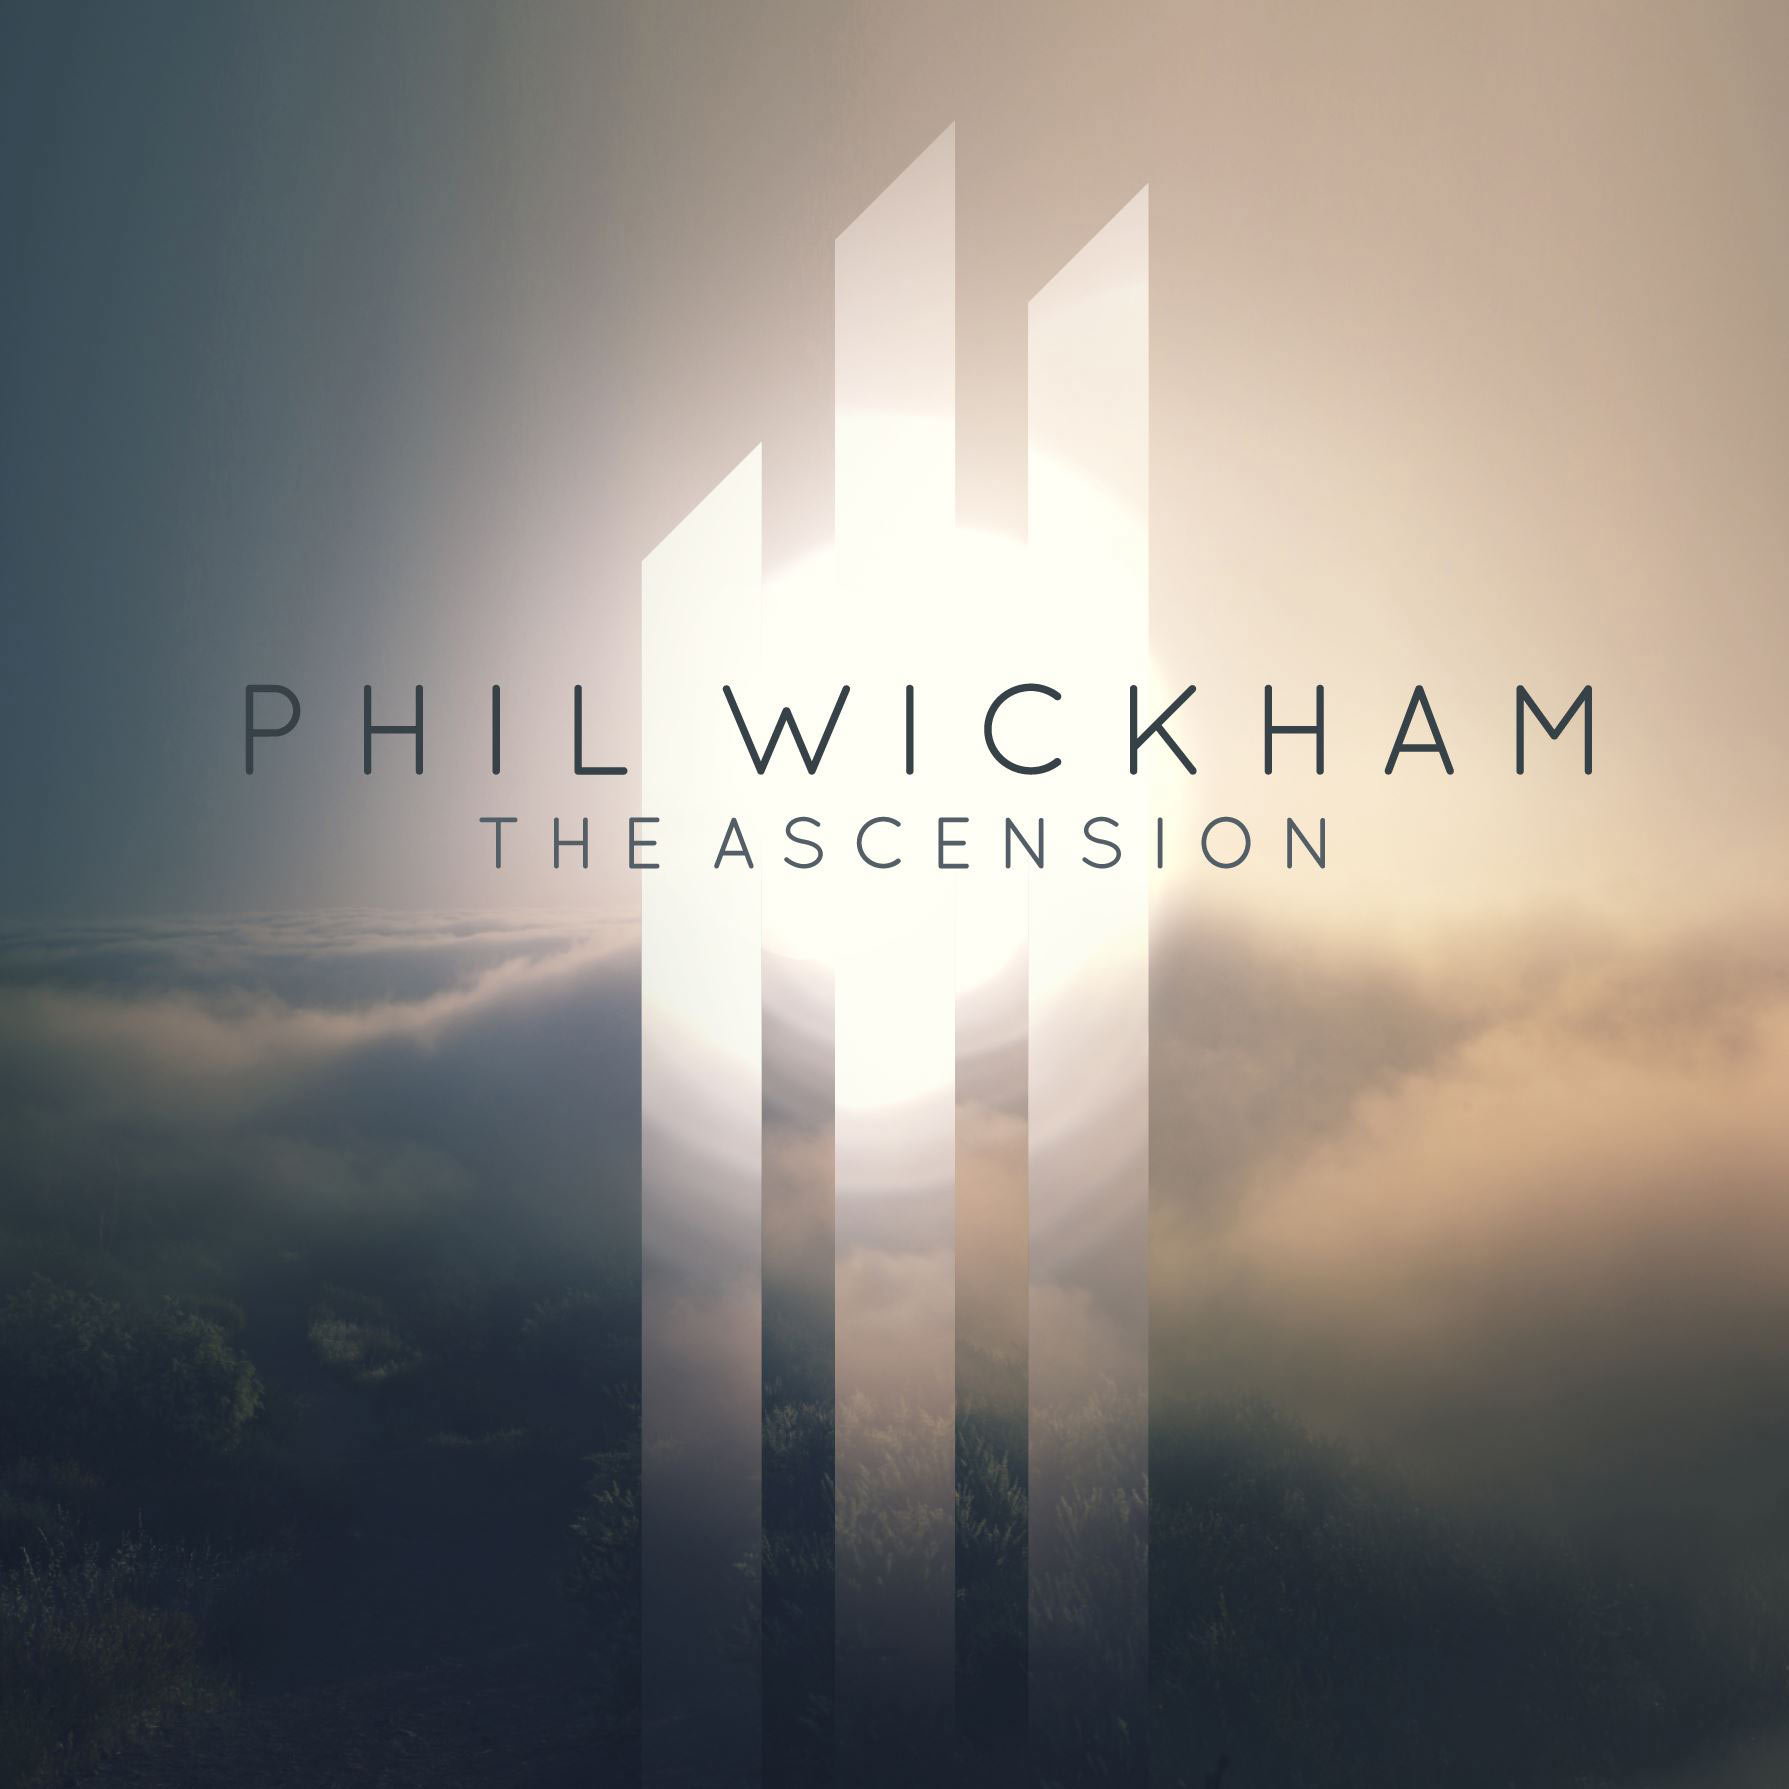 Phil Wickham, “This is Amazing Grace”